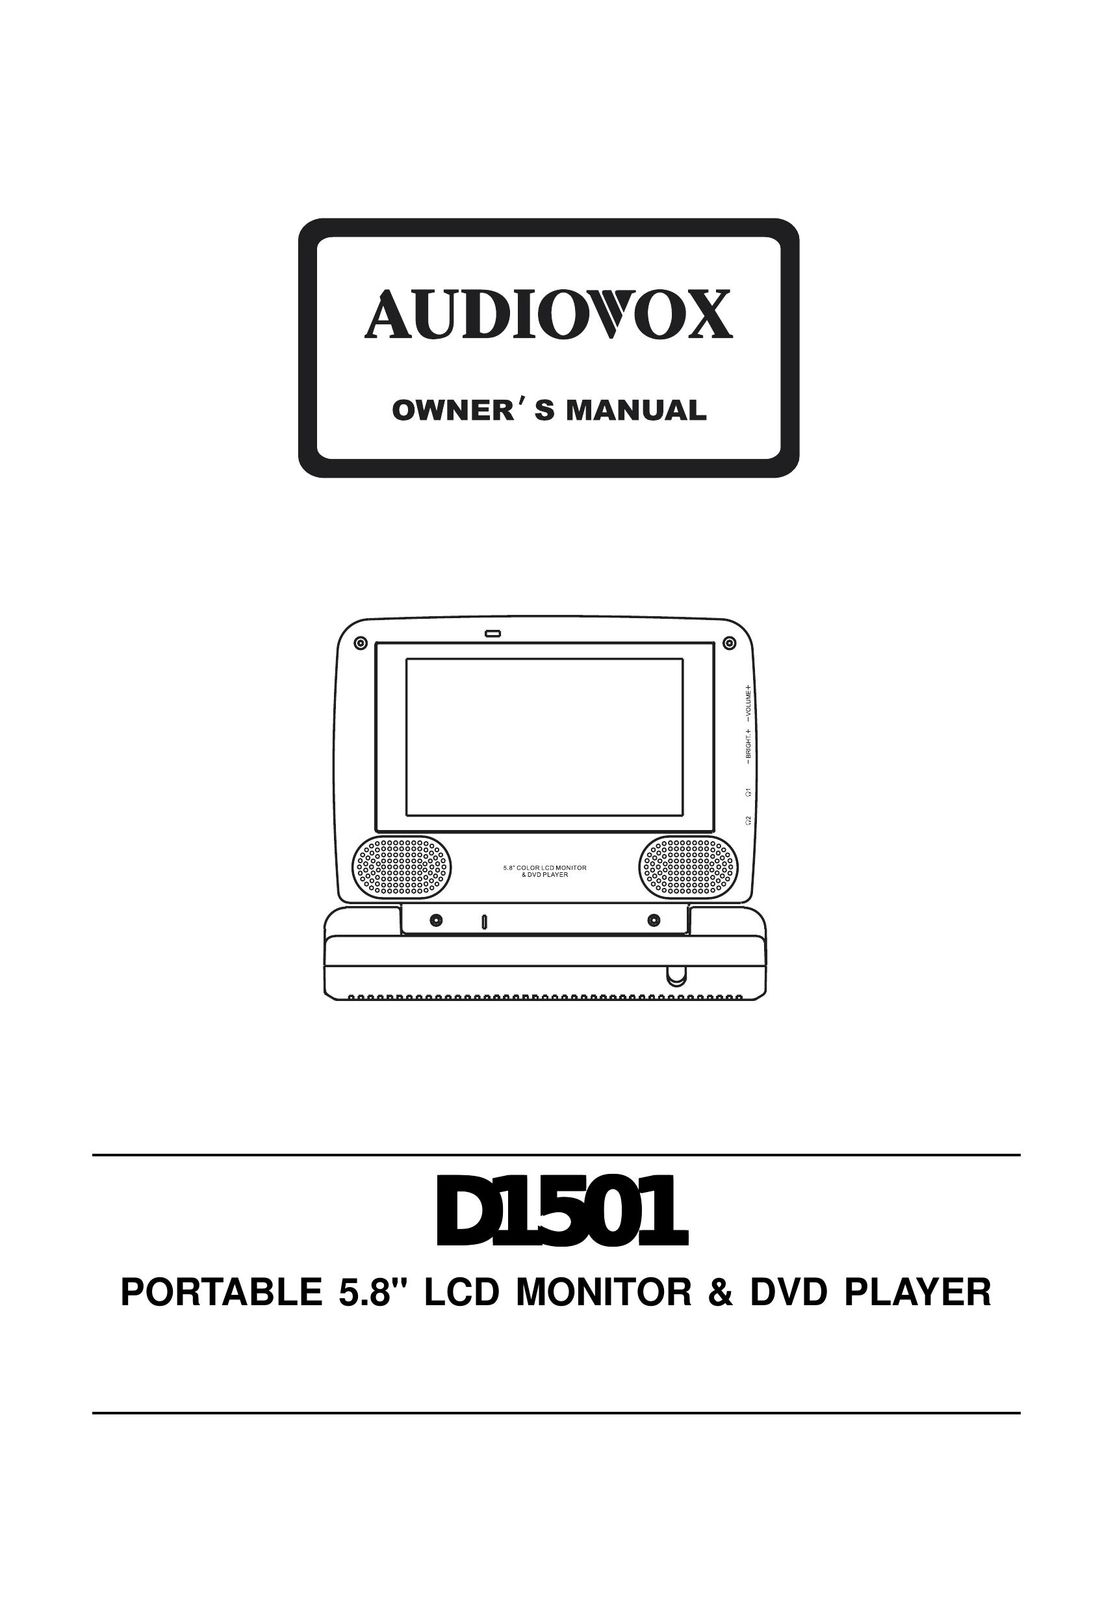 Audiovox D1501 Portable DVD Player User Manual